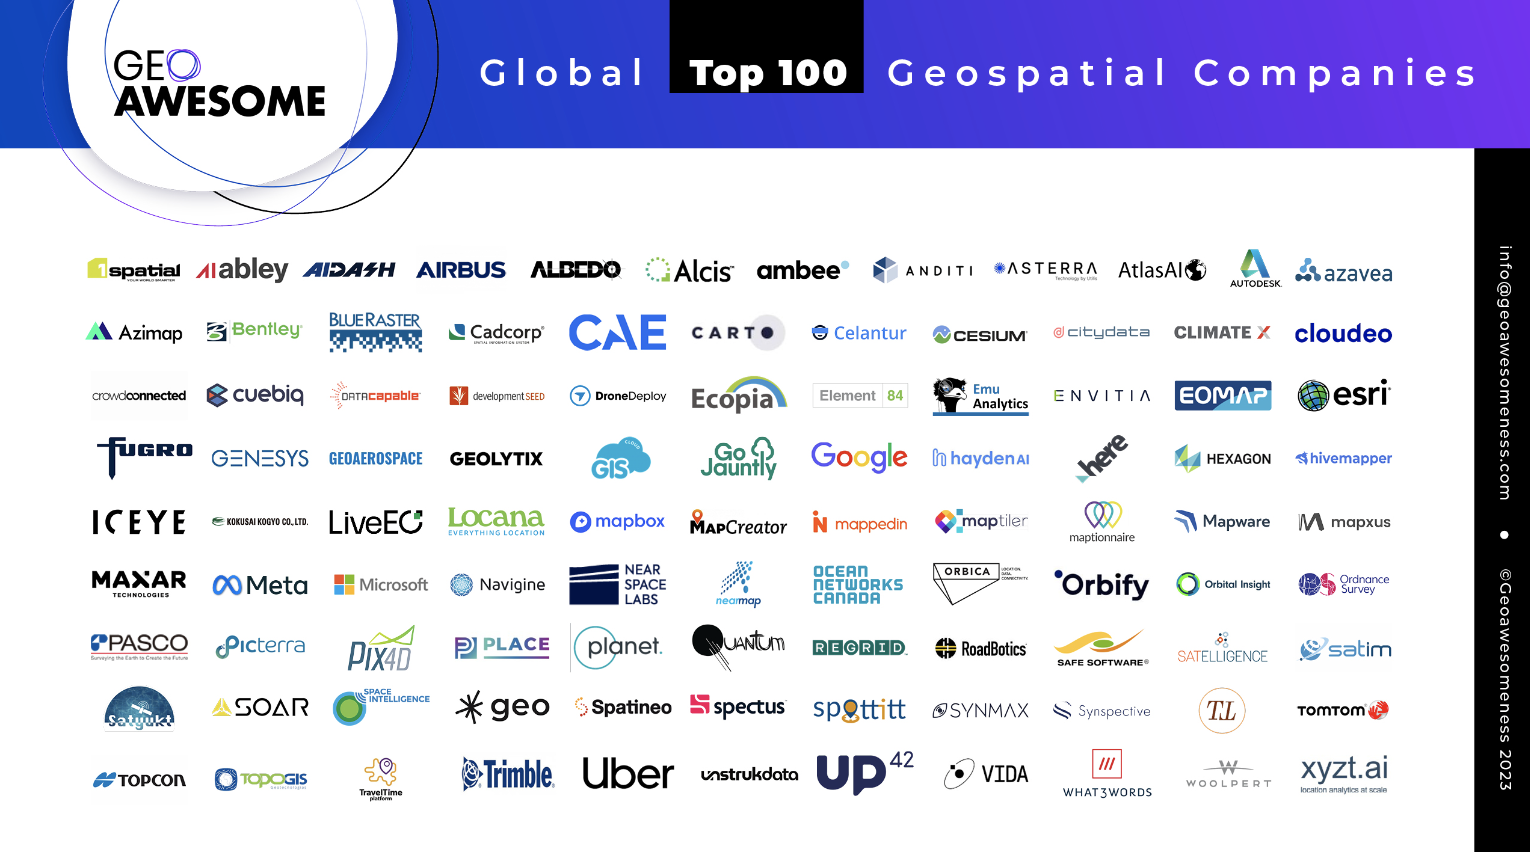 Global Top 100 Geospatial companies